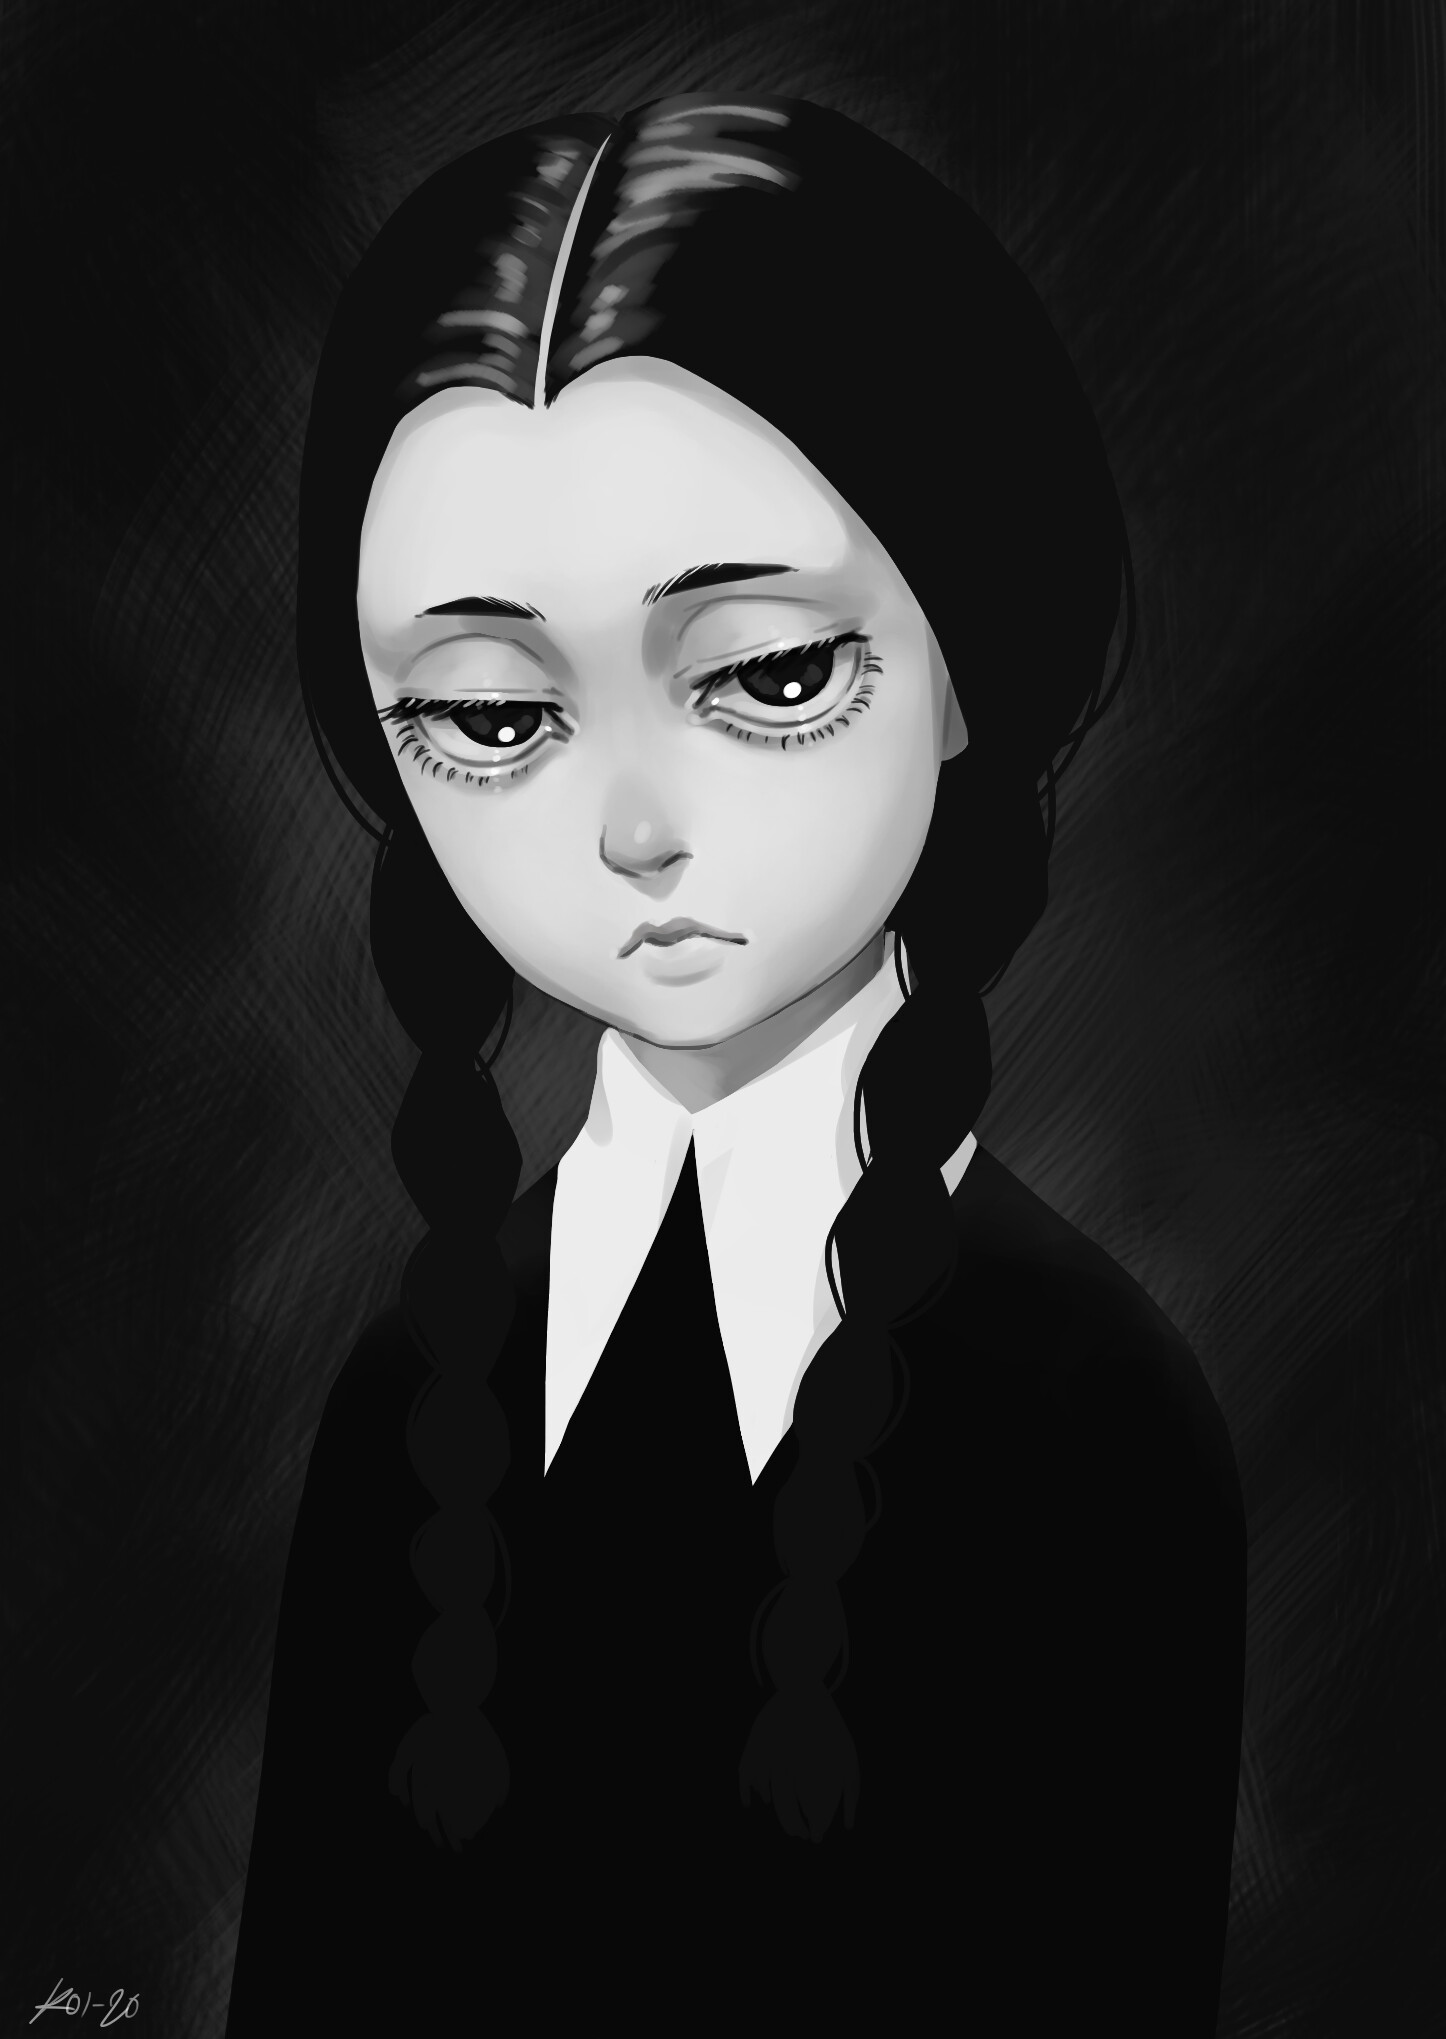 Wednesday Addams Characters As Anime  YouTube